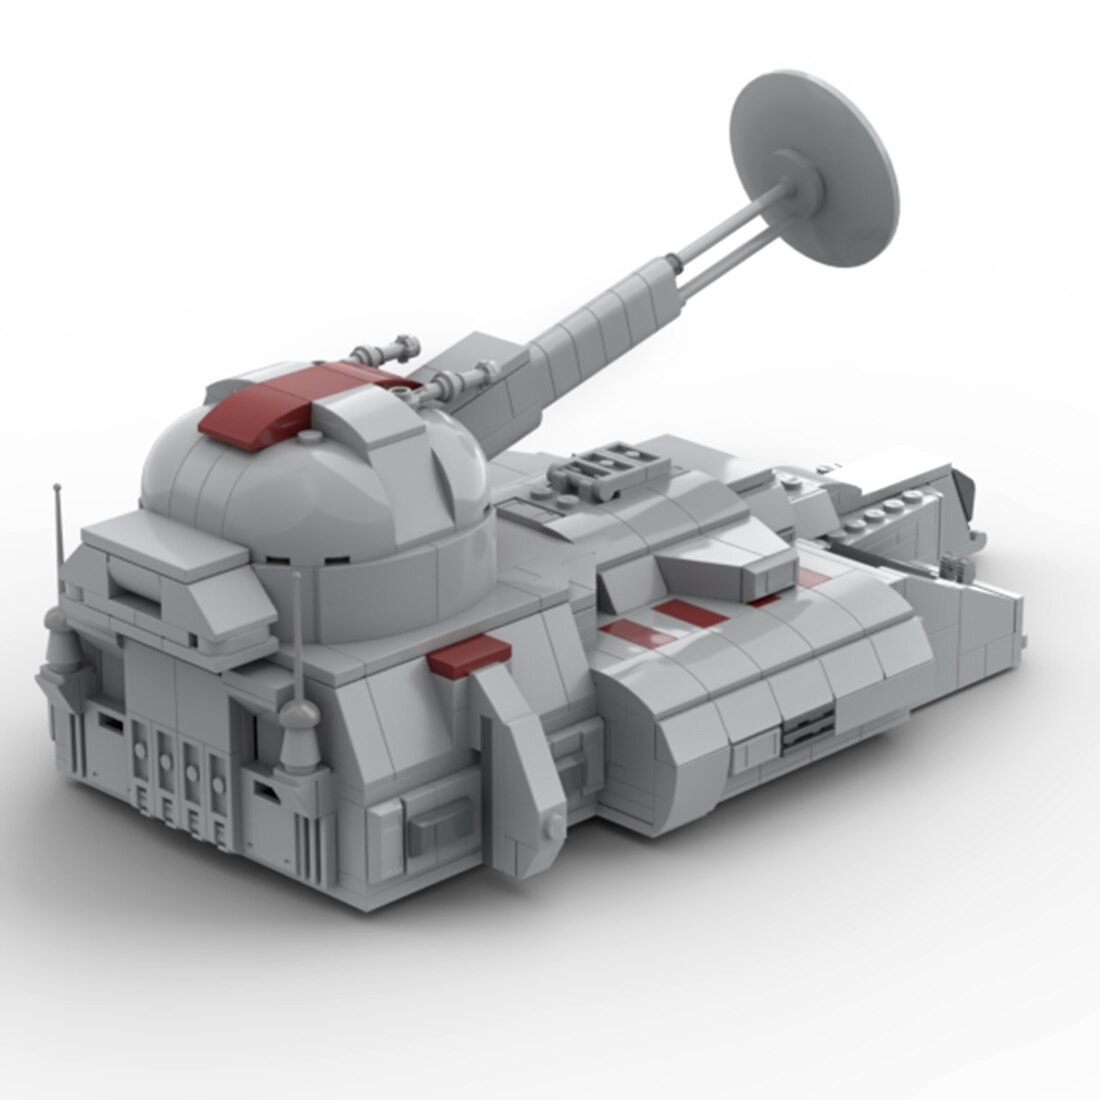 Maxim Gun Military MOULD KING 14009 with 1399 pieces - MOC Brick Land